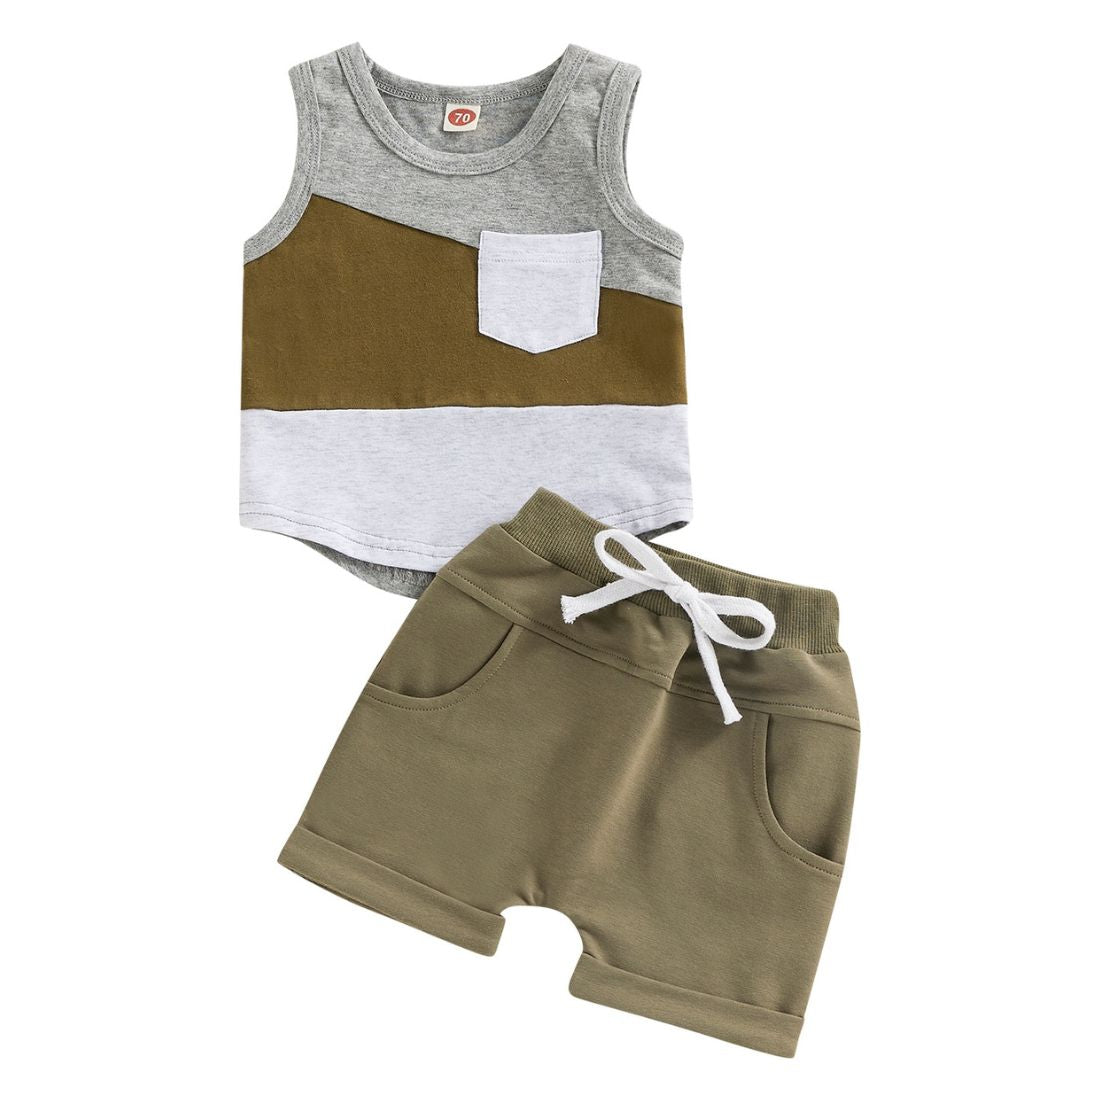 Team Tank Baby Boy Clothing Set